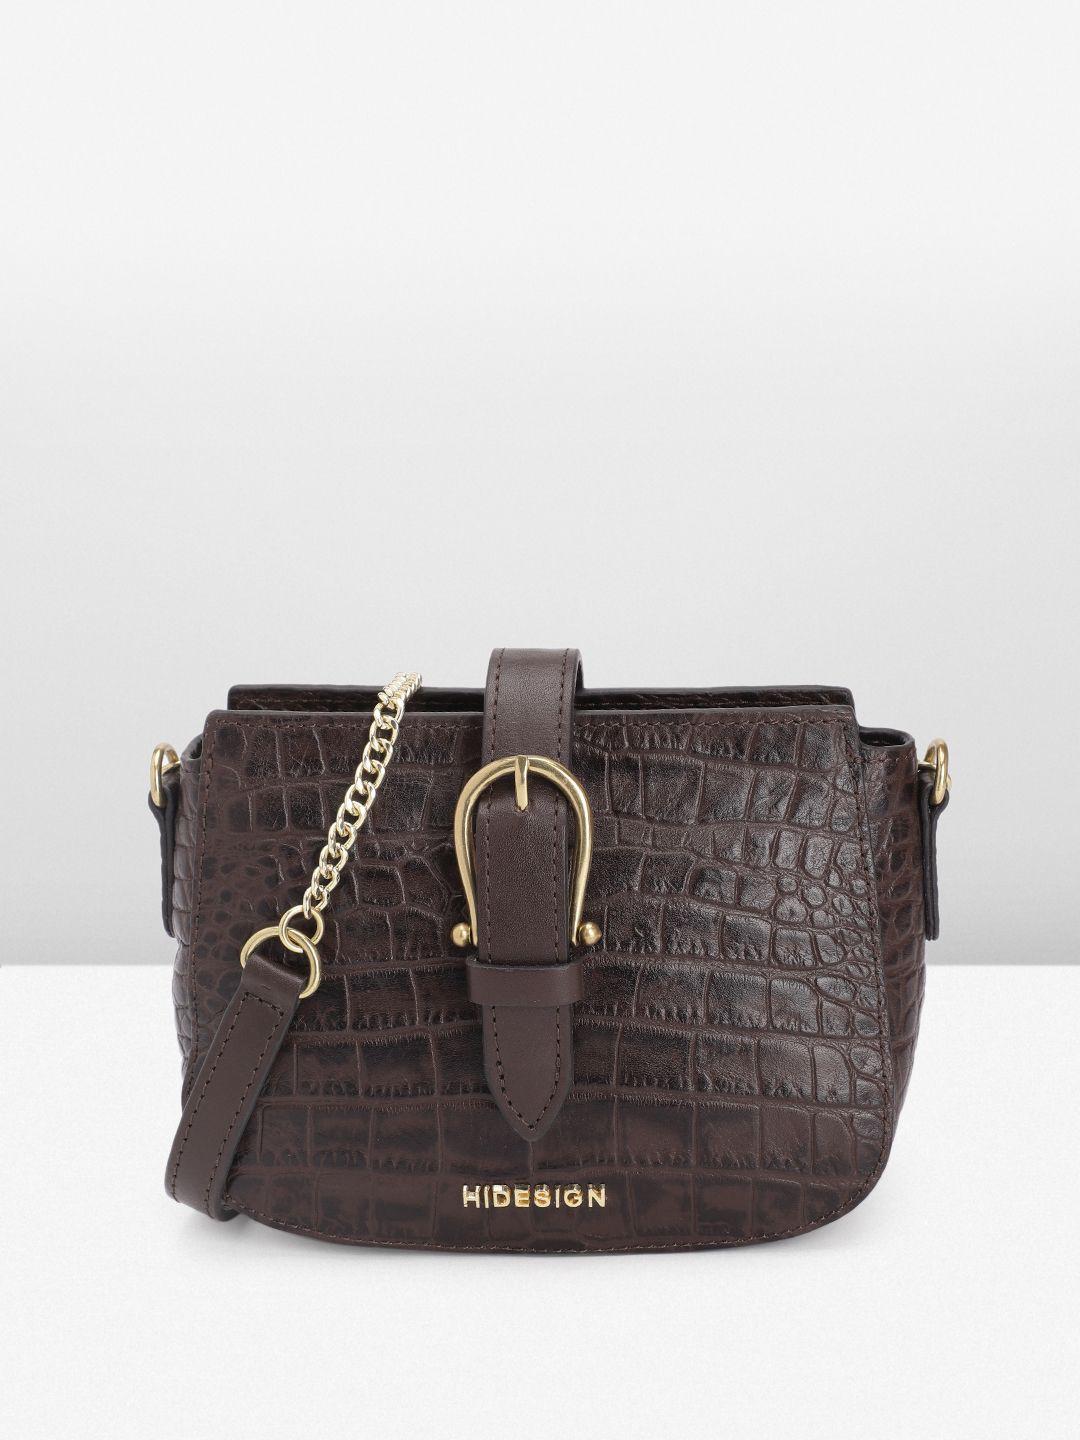 hidesign textured leather sling bag